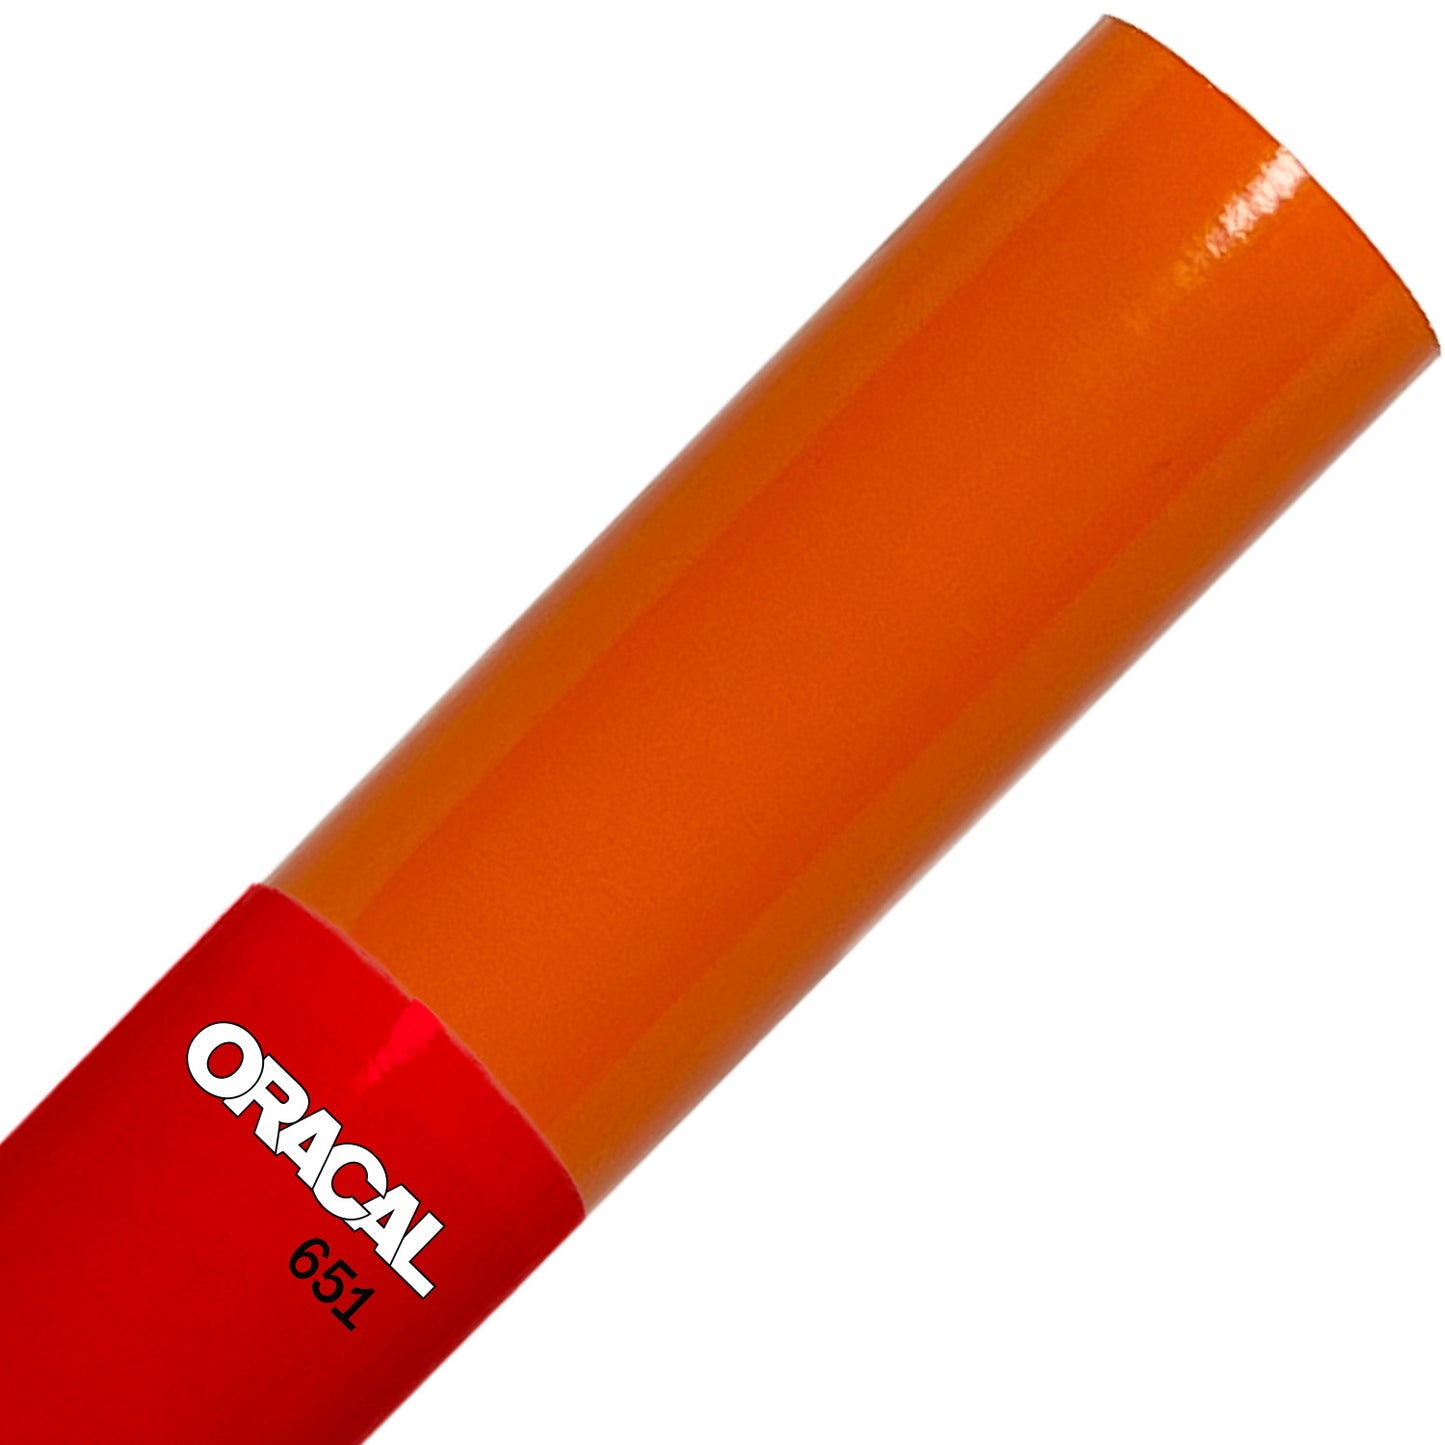 Oracal 651 Glossy Vinyl Rolls - Orange, 12 inch x 6 Foot